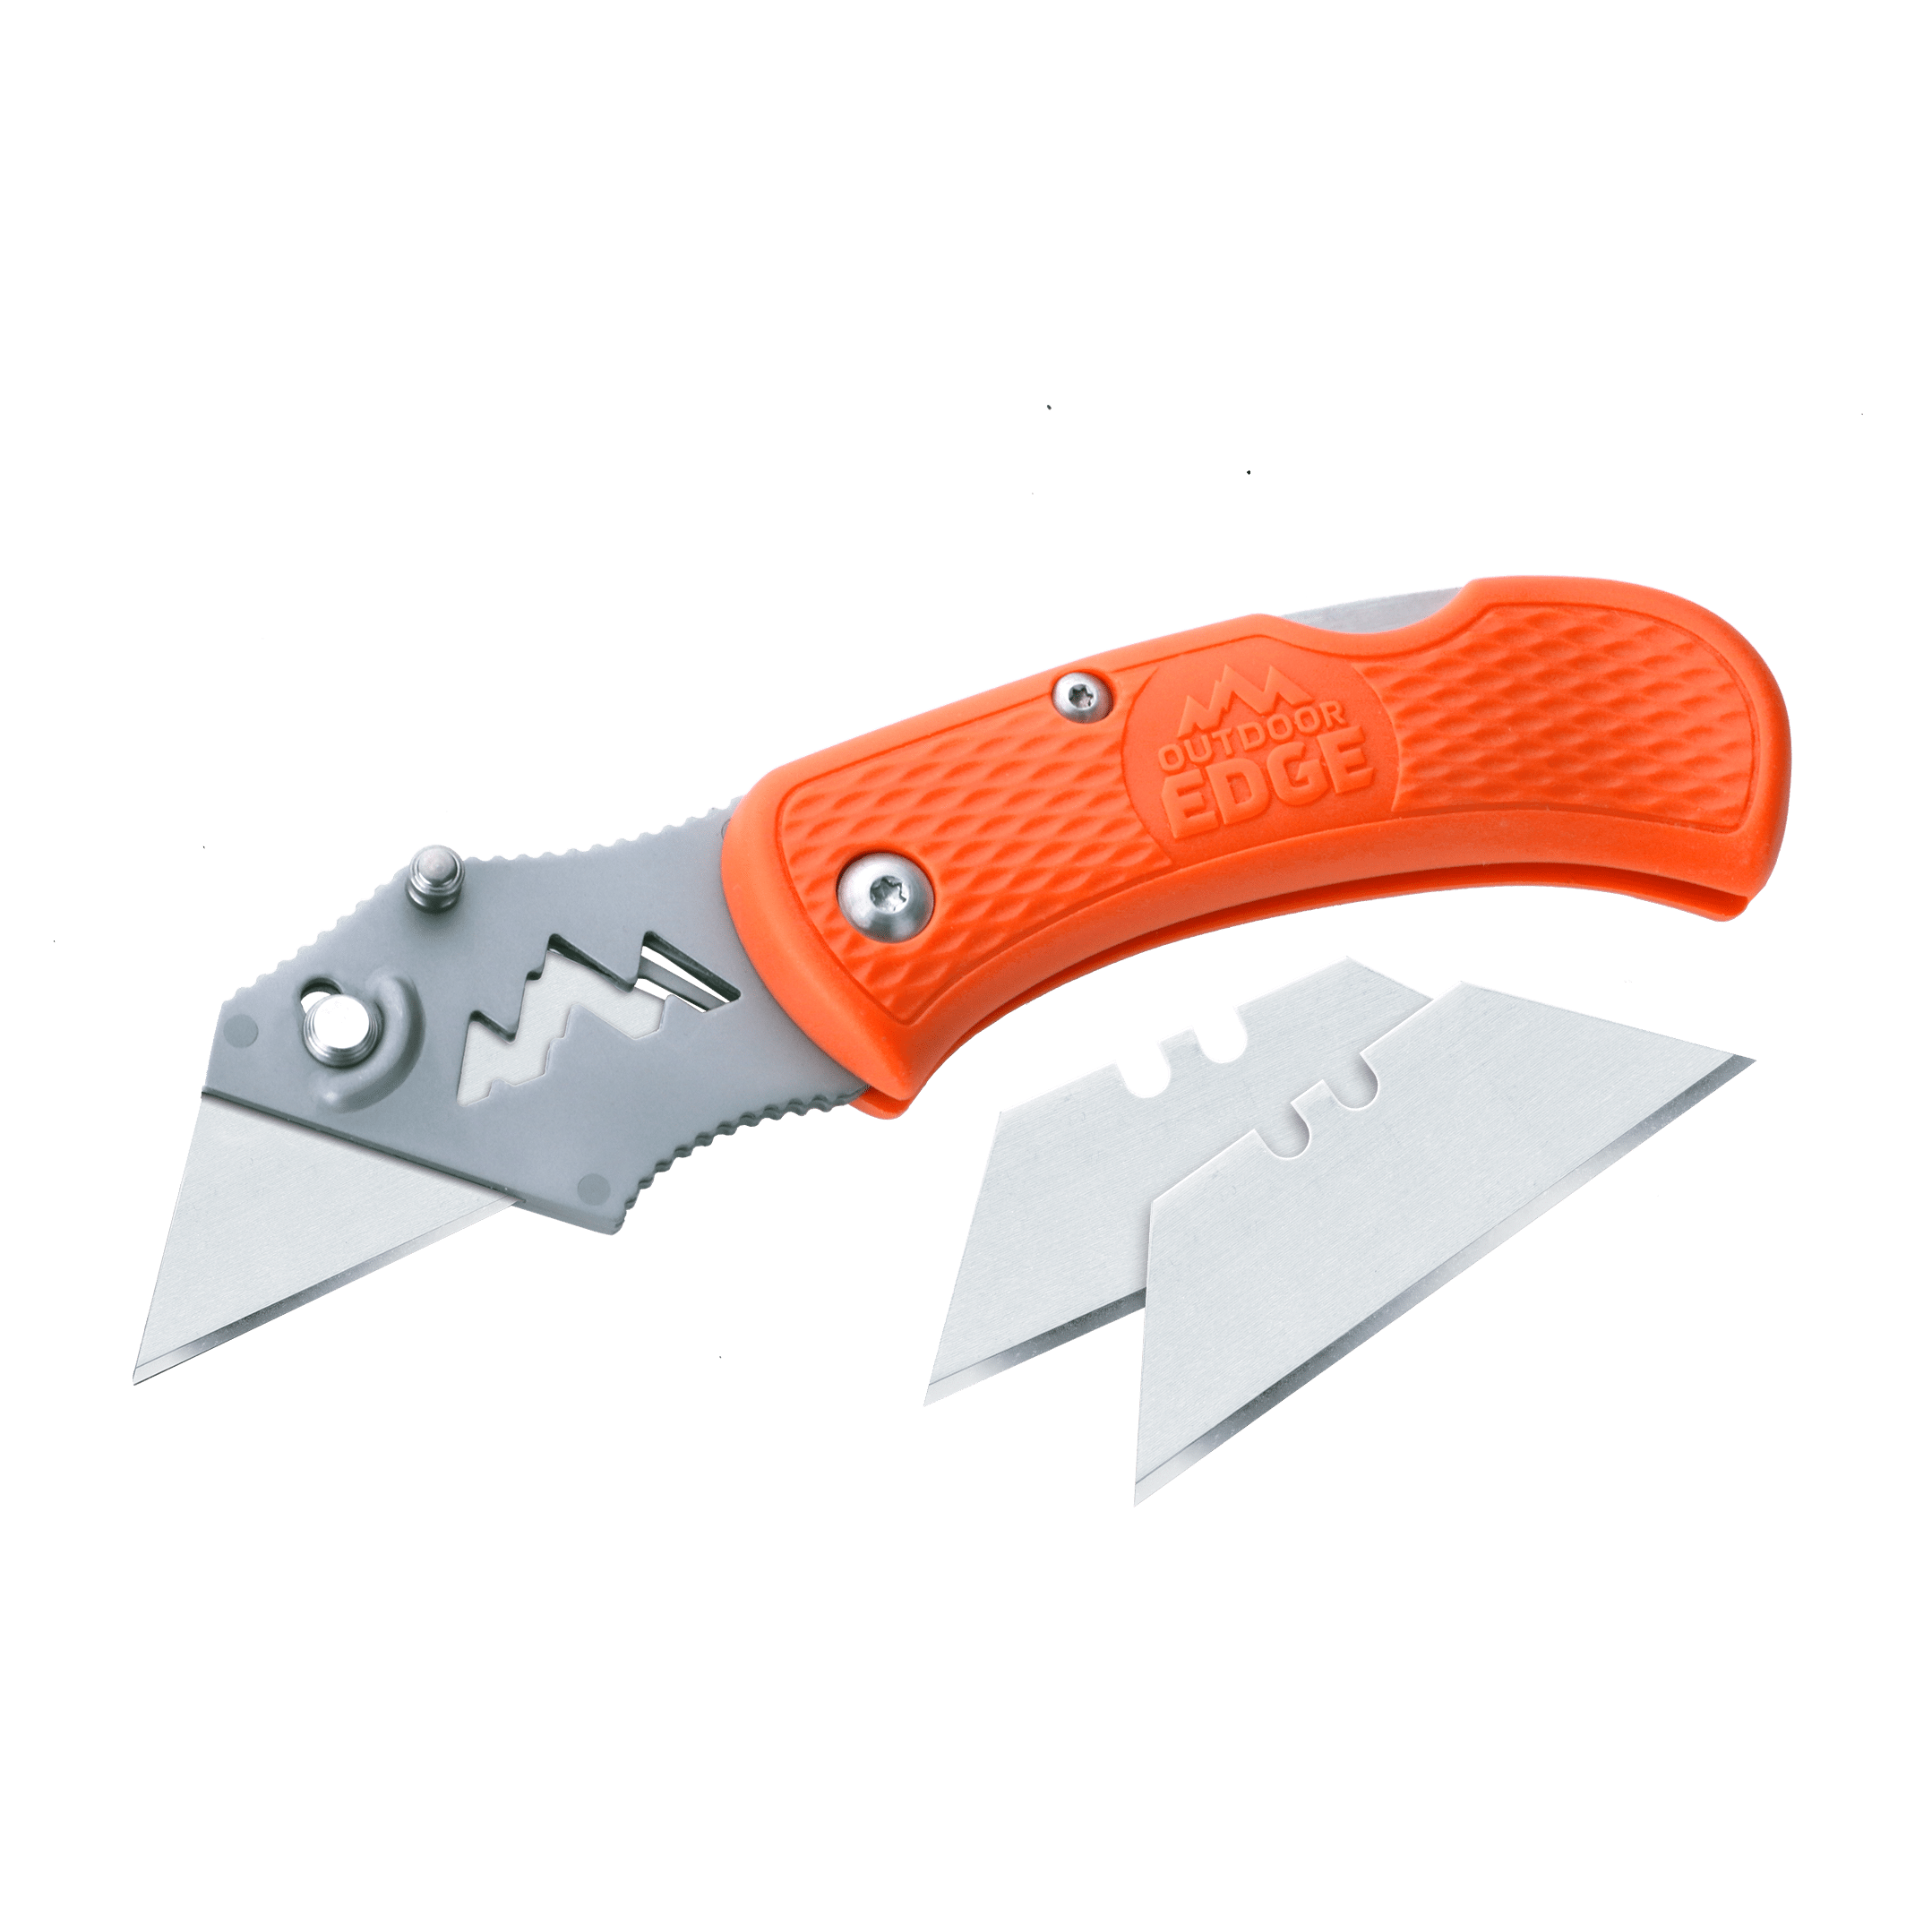 snap blade knife